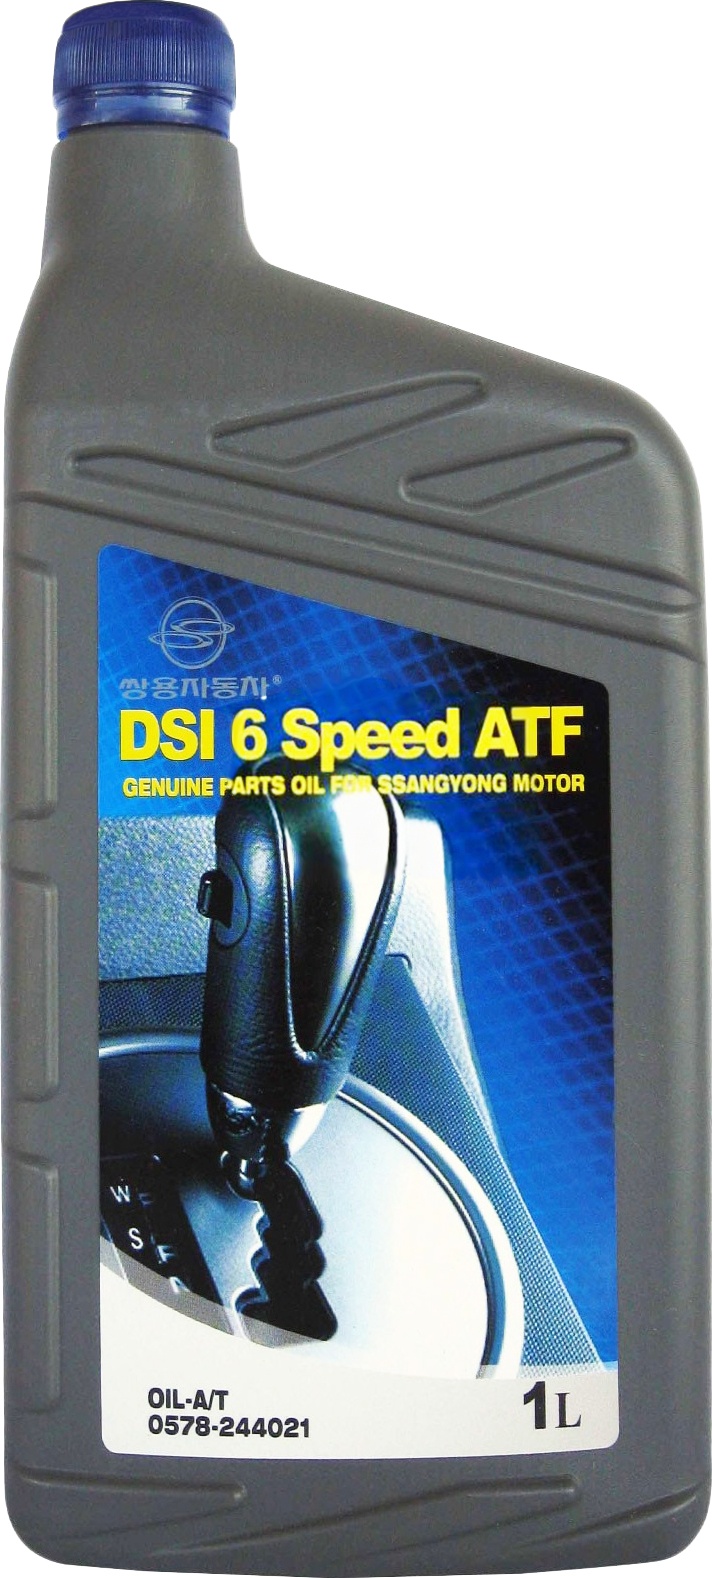 SSANGYONG DSI 6 Speed ATF. SSANGYONG Speed ATF DSI 6 Oil-a/t. 6 Speed DSI масло. Масло 0578-244021. Масло санг йонг